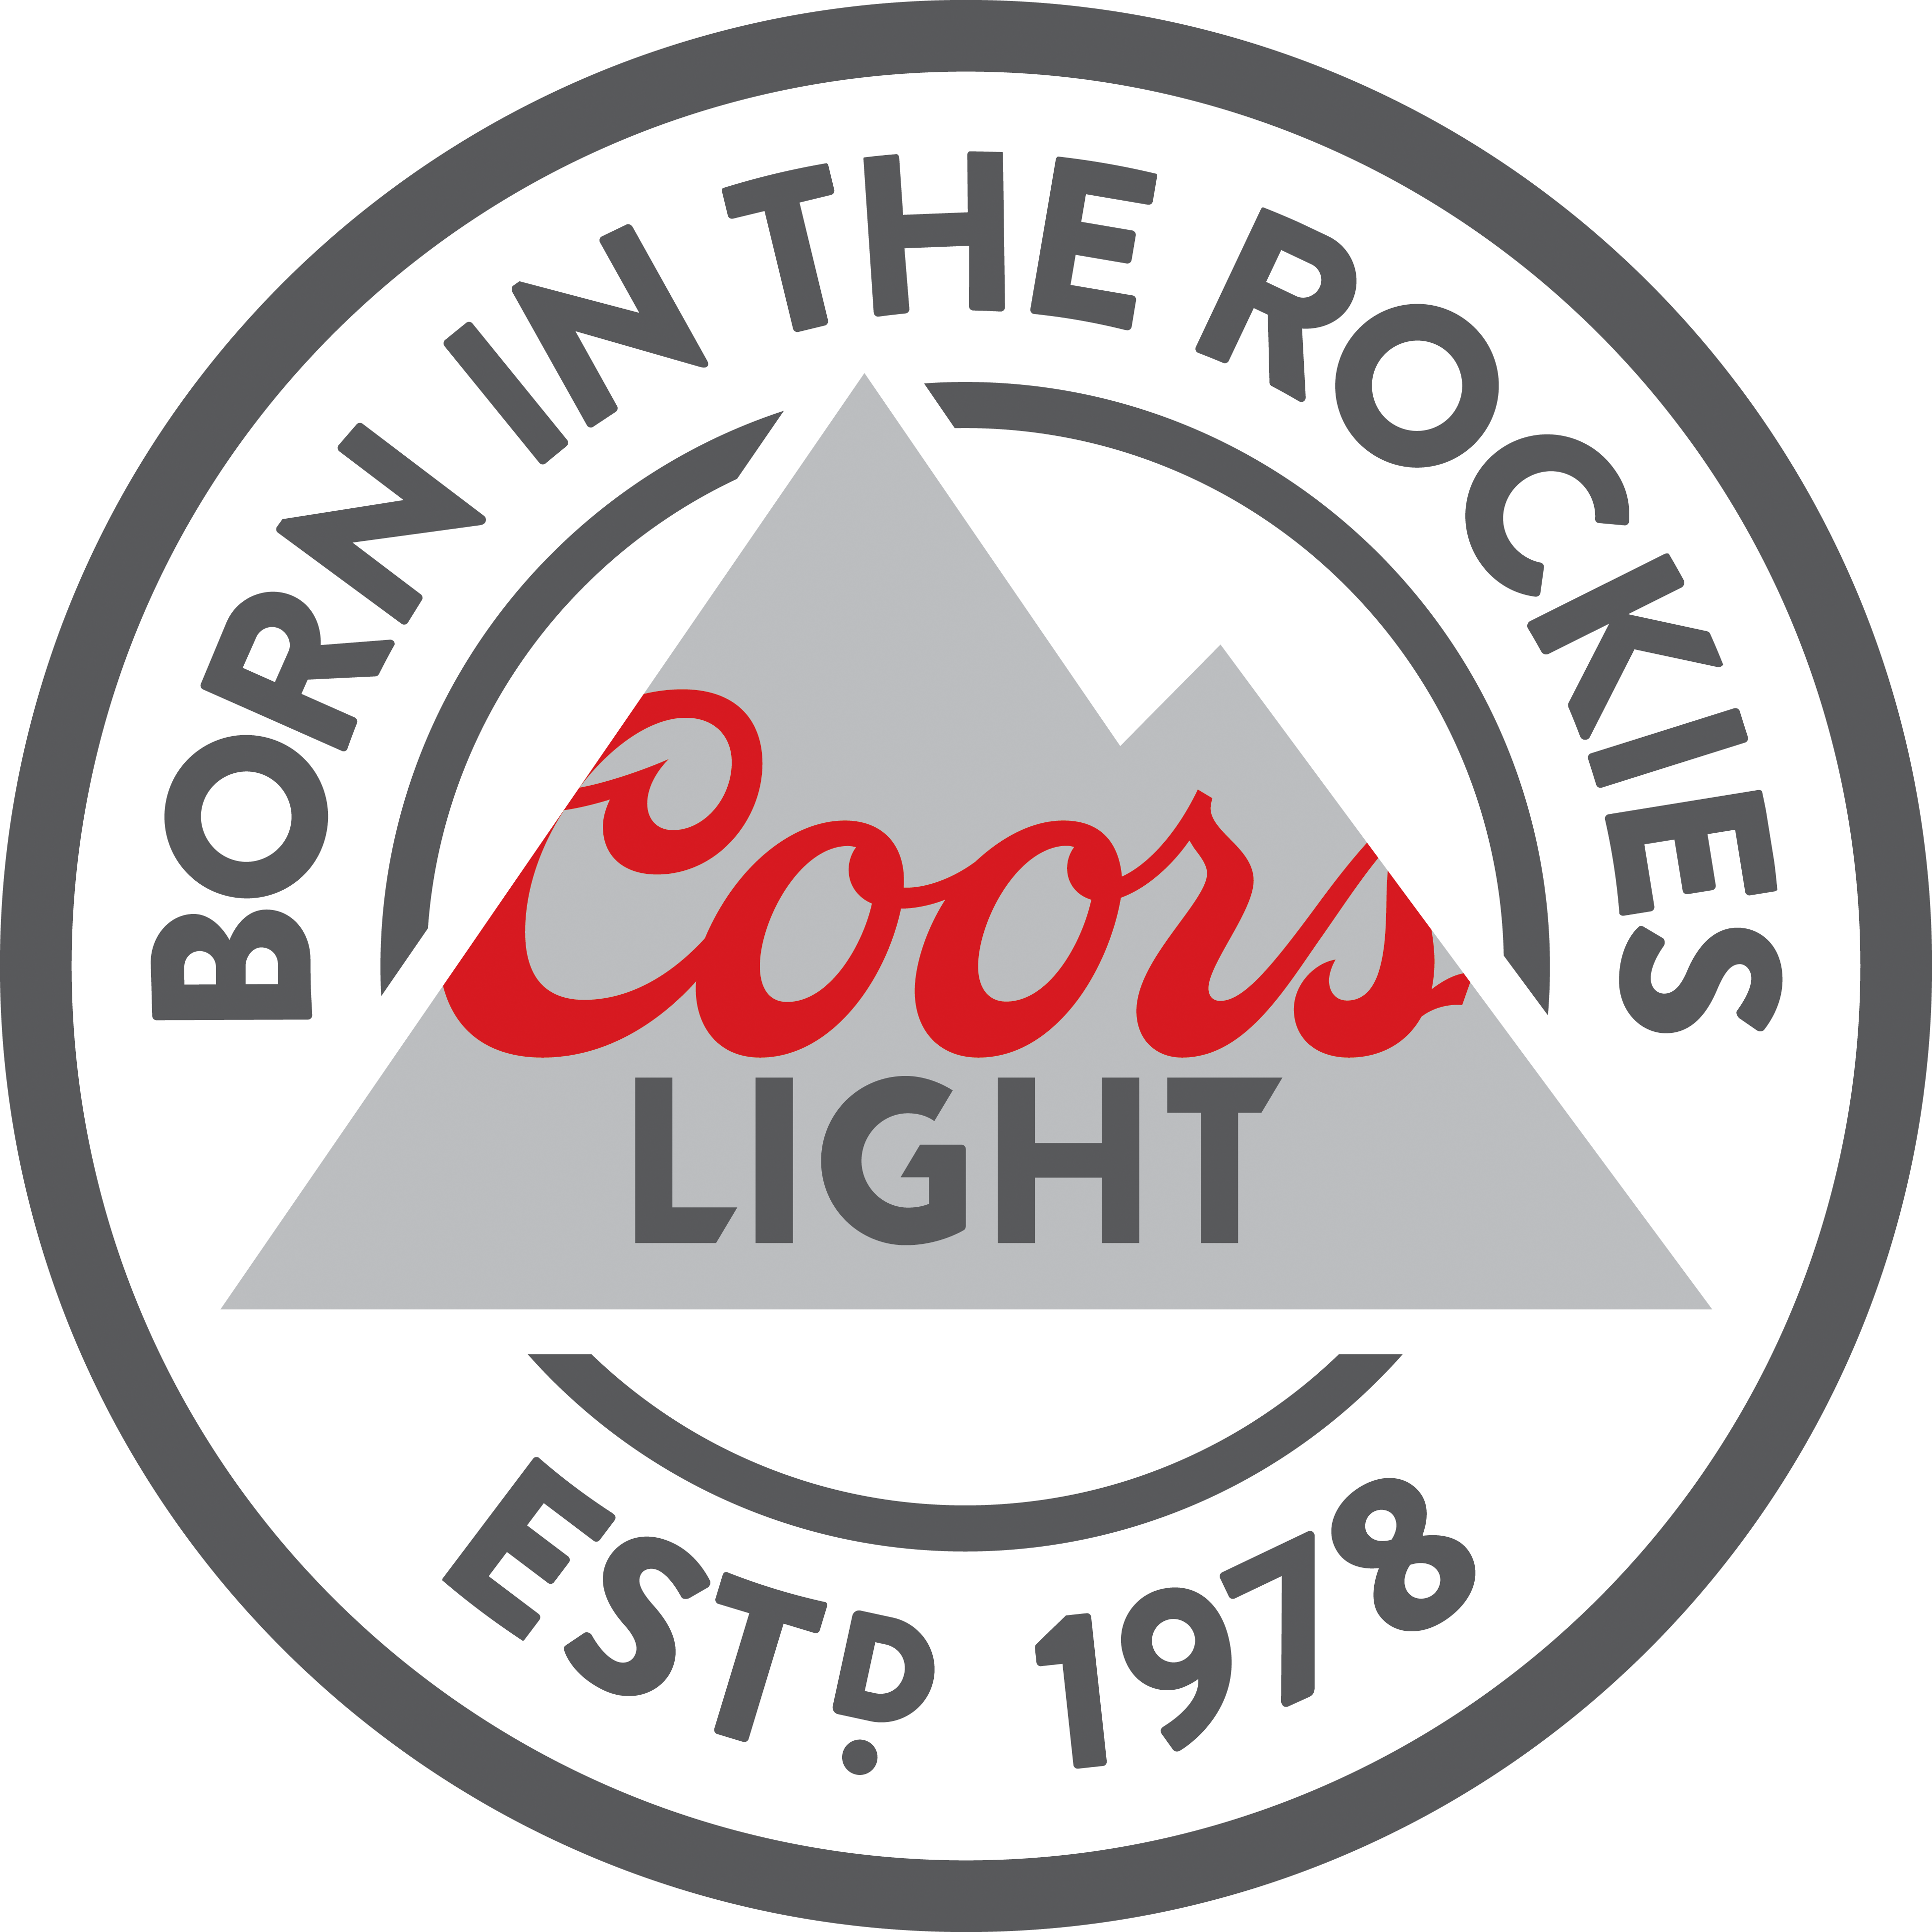 Coors Logo